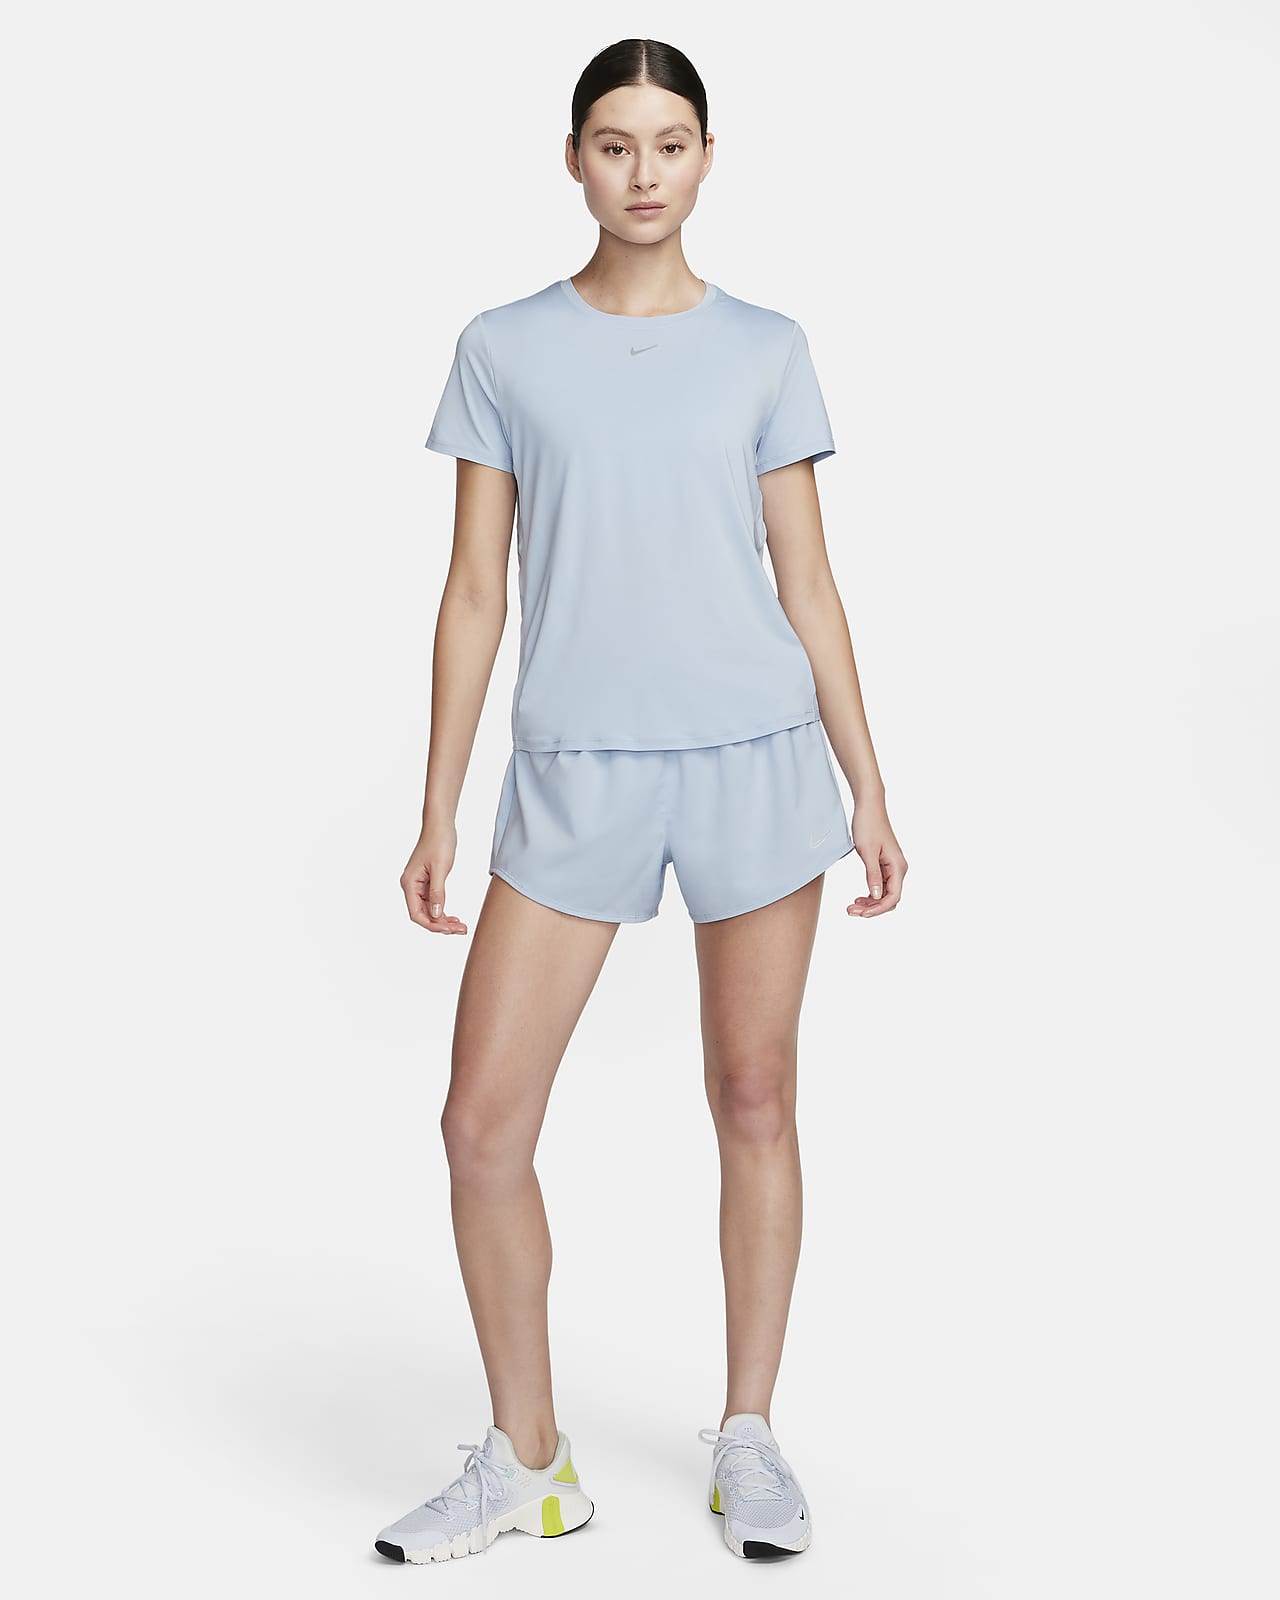 One Short-Sleeve Dri-FIT Classic Women\'s Nike Top.